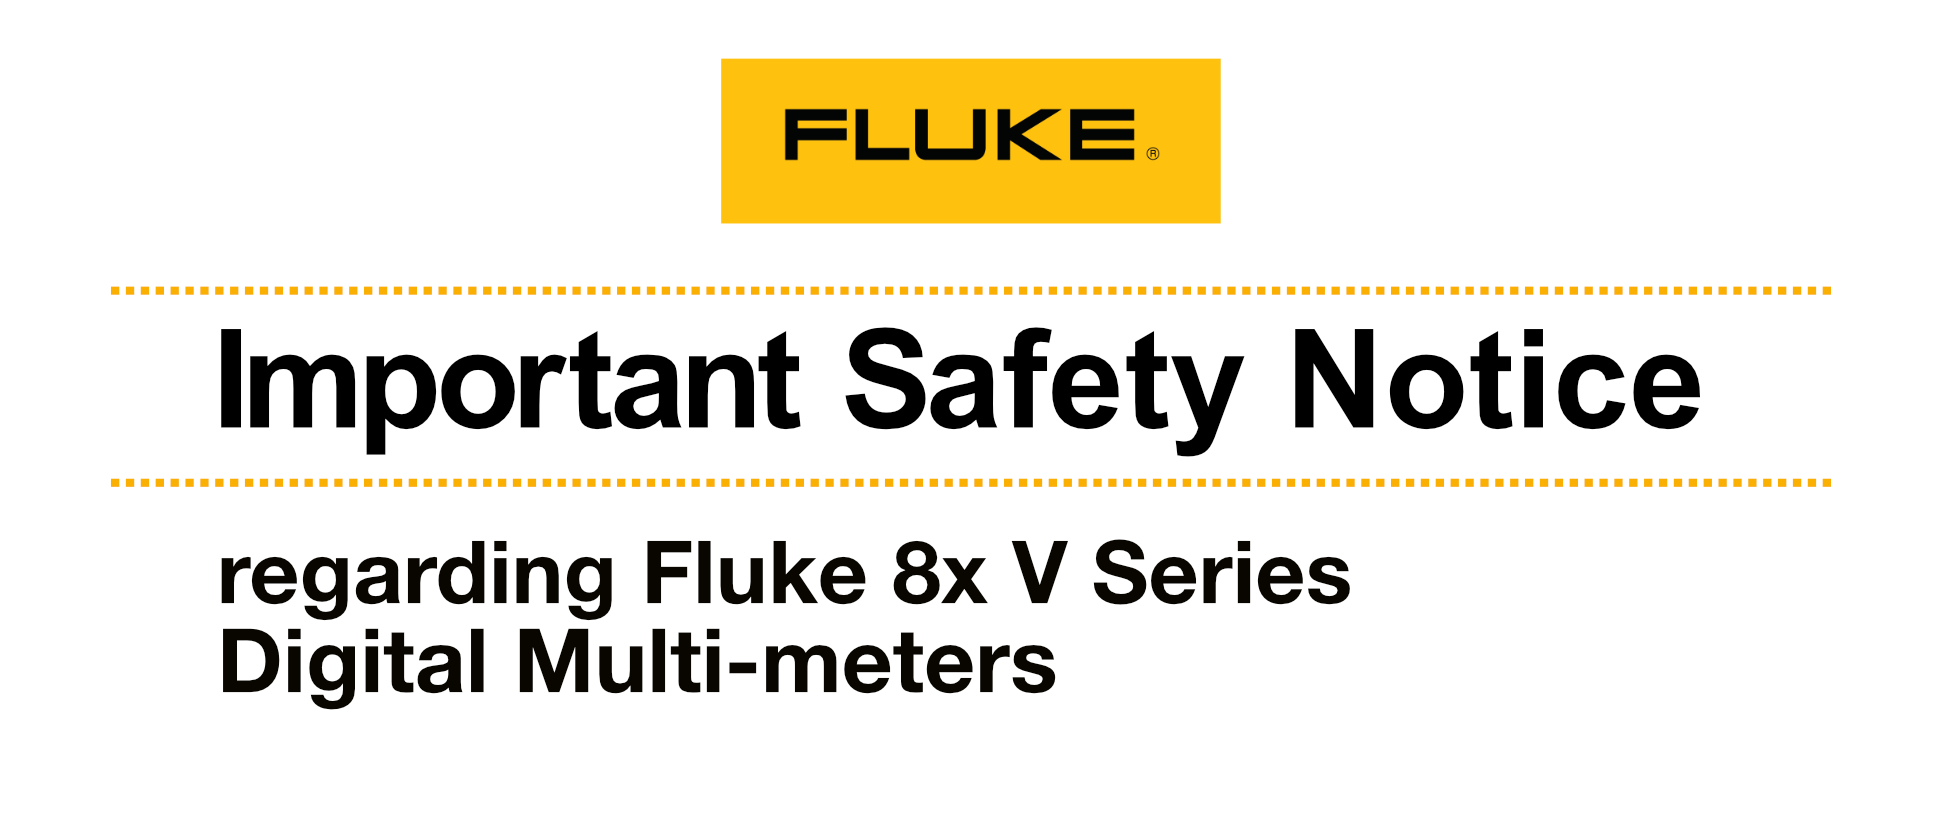  Important Safety Notice regarding Fluke 8x V Series Digital Multi-meters